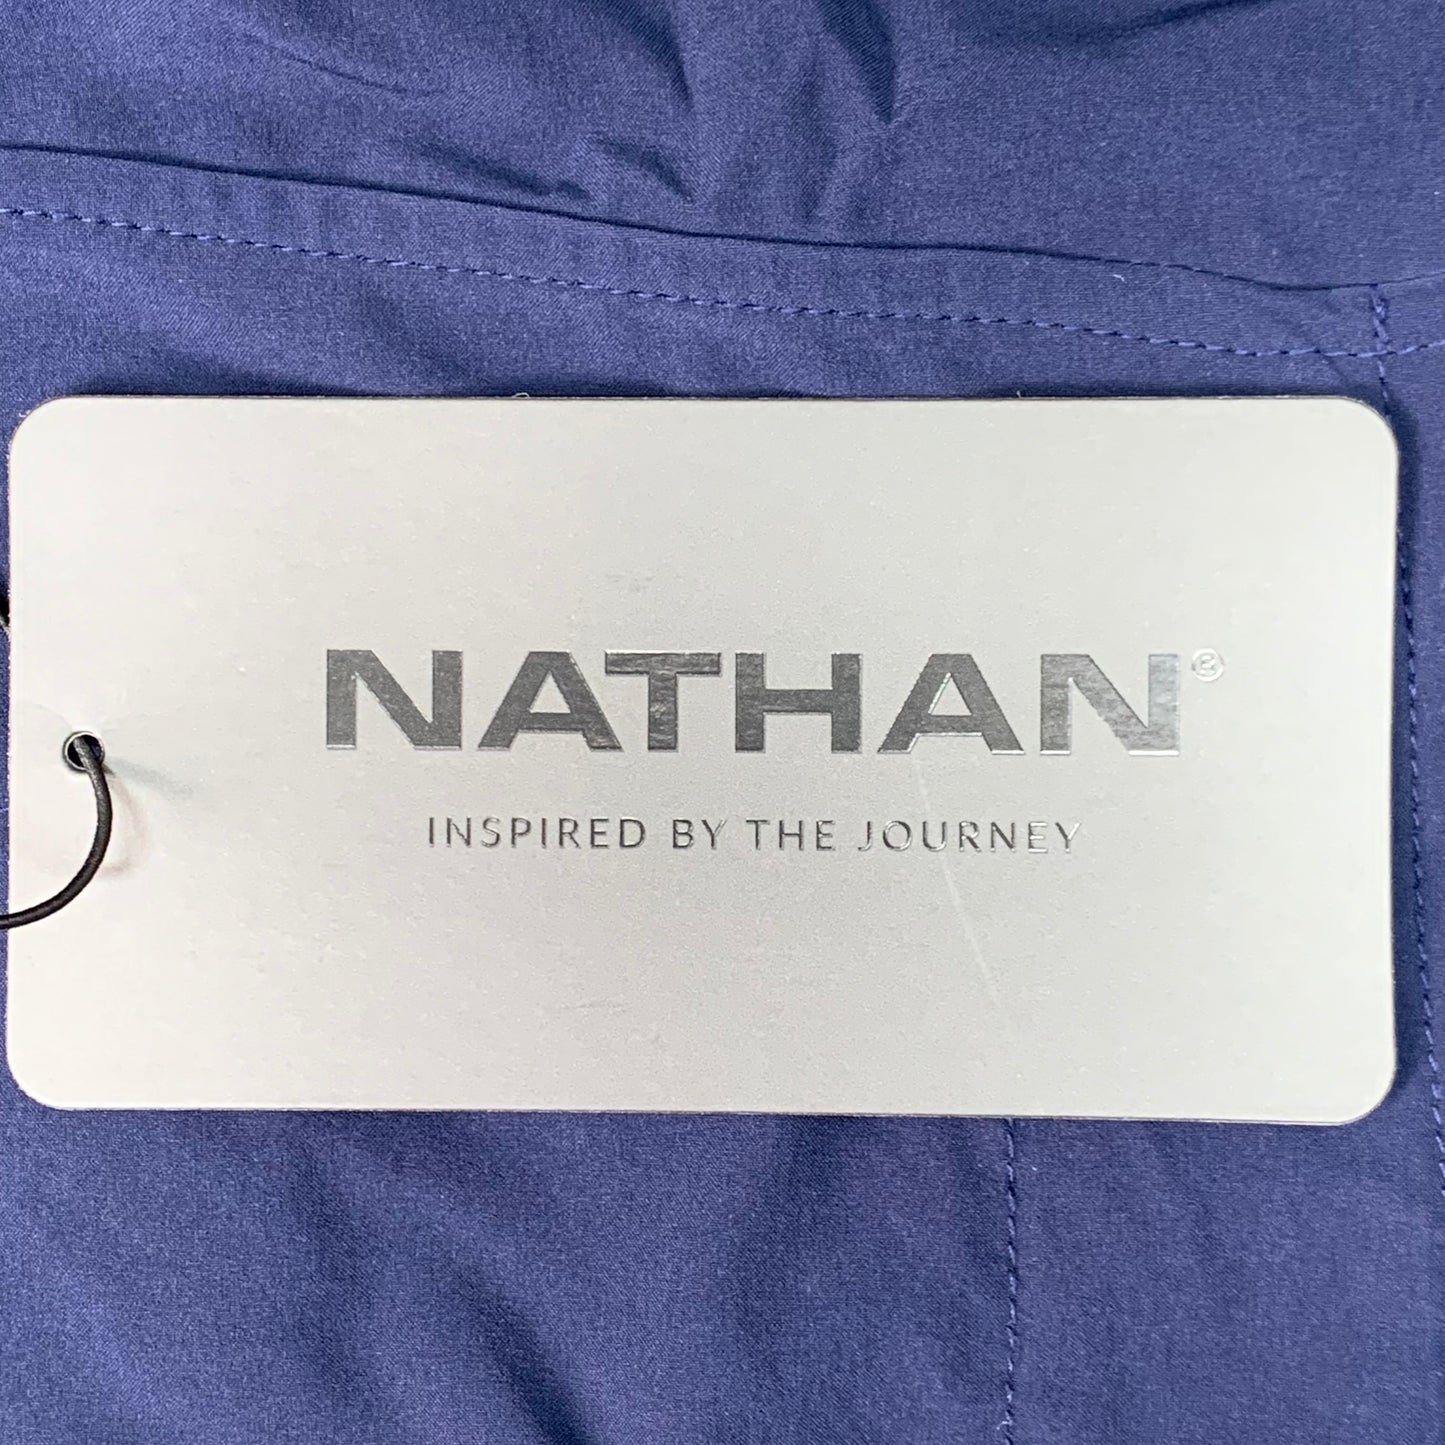 NATHAN Vamos Track Jacket Men's Sz Medium Peacoat NS50320-60135-M (New)